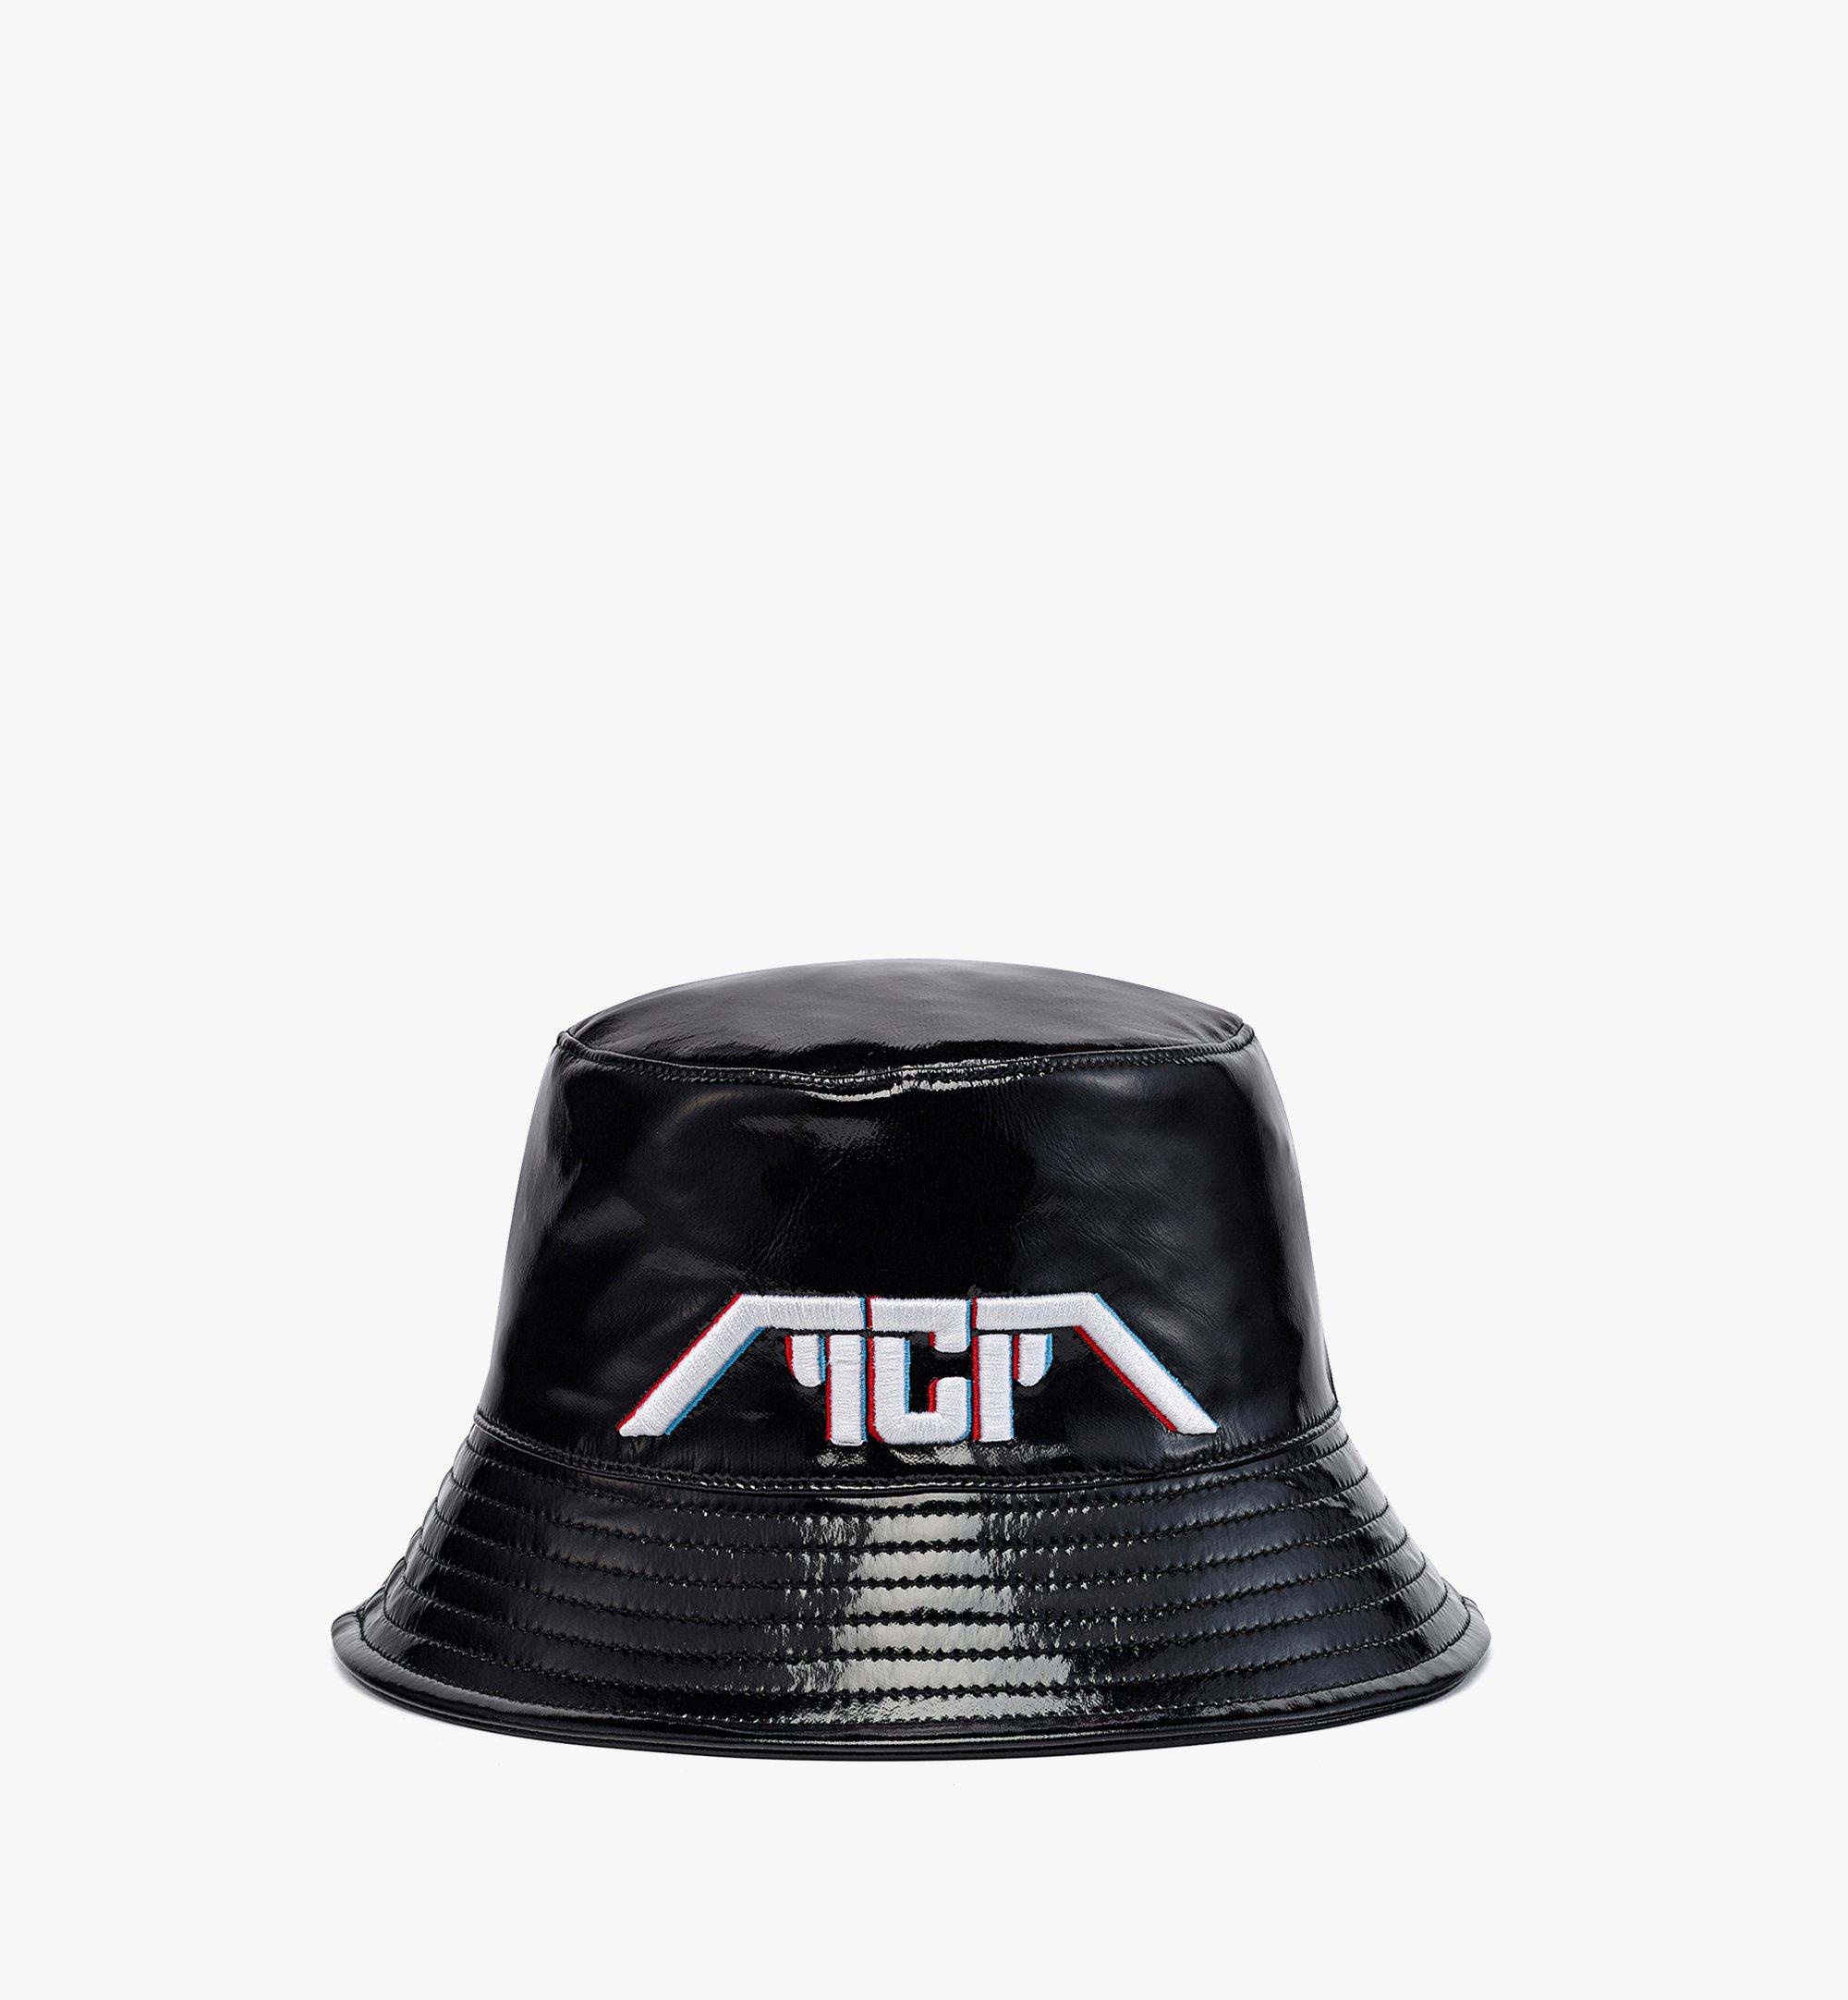 Meta Cyberpunk Bucket Hat - 1